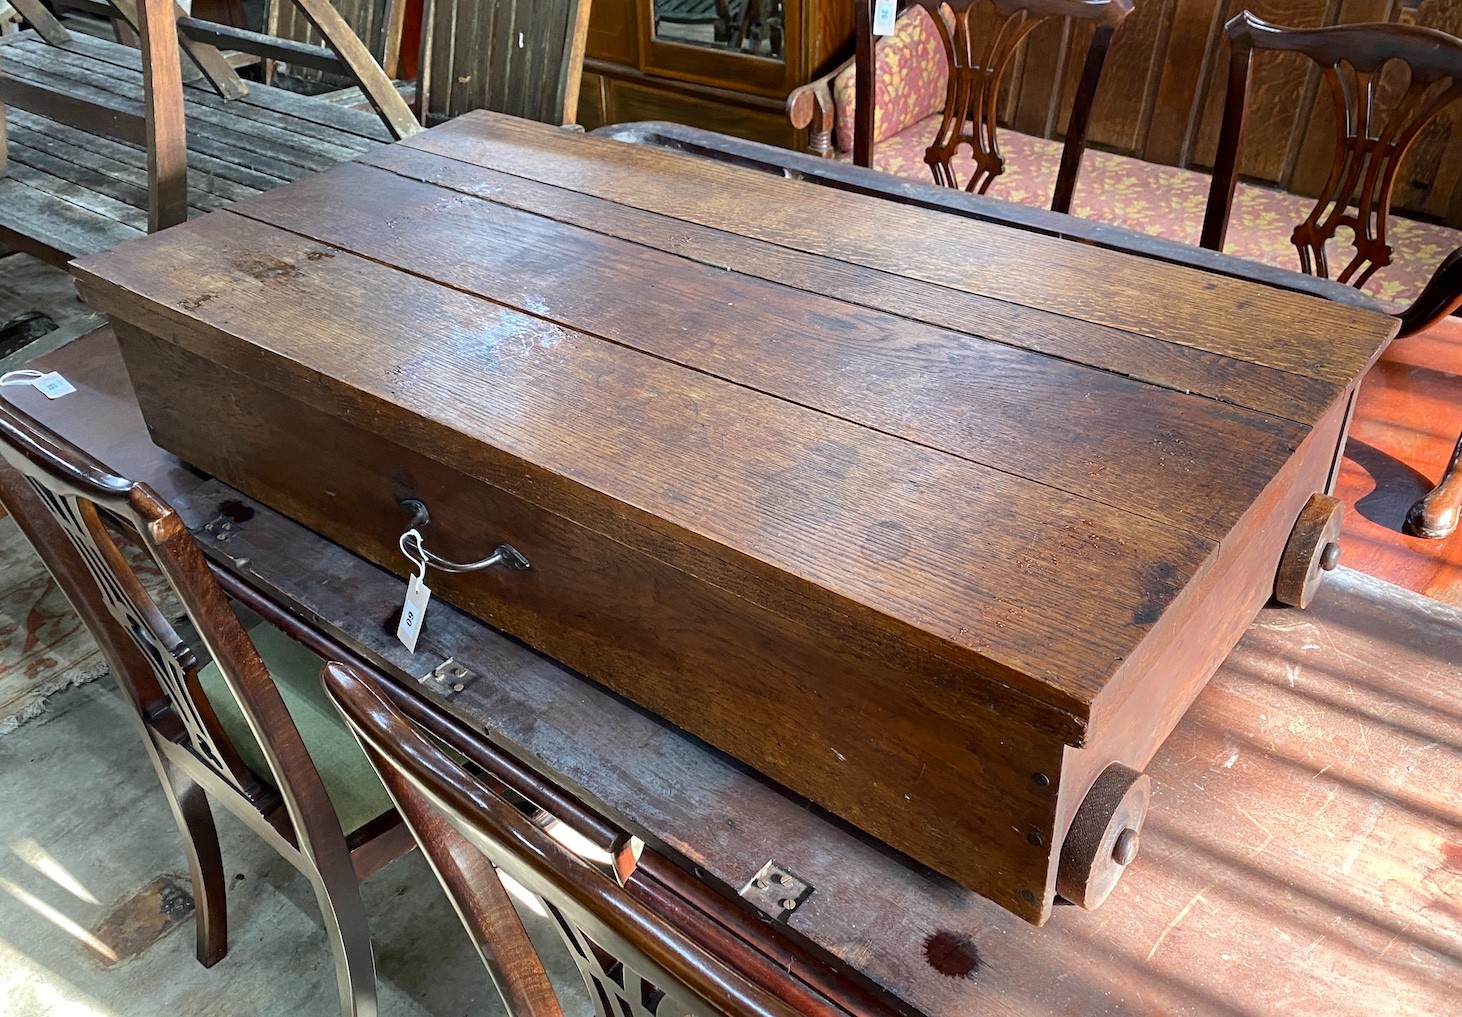 An oak under-bed storage box on wheels, length 123cm, depth 62cm, height 26cm